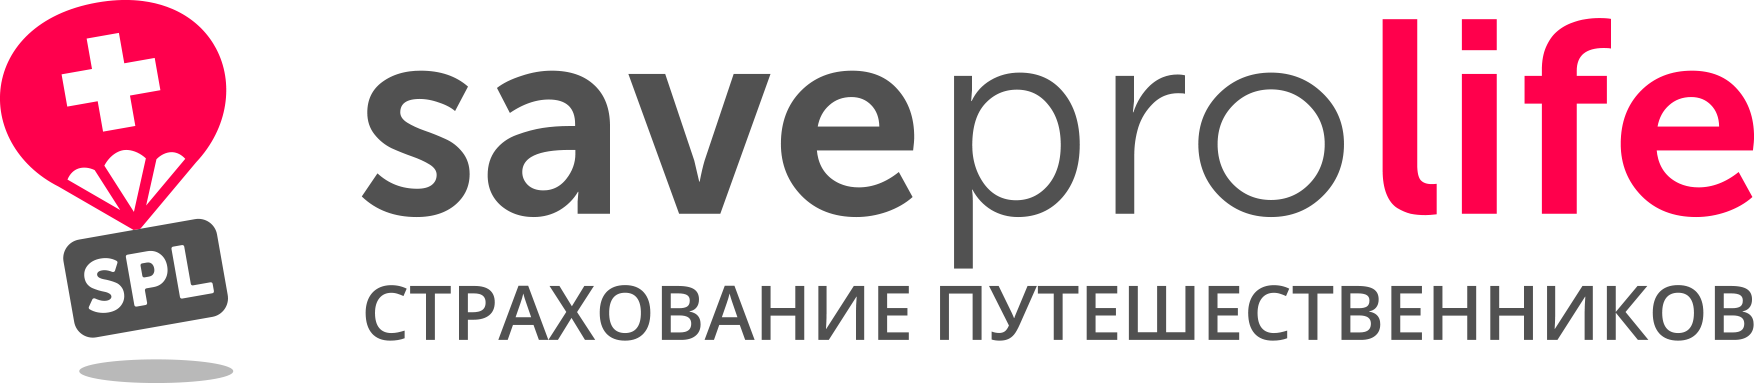 logo SPL large